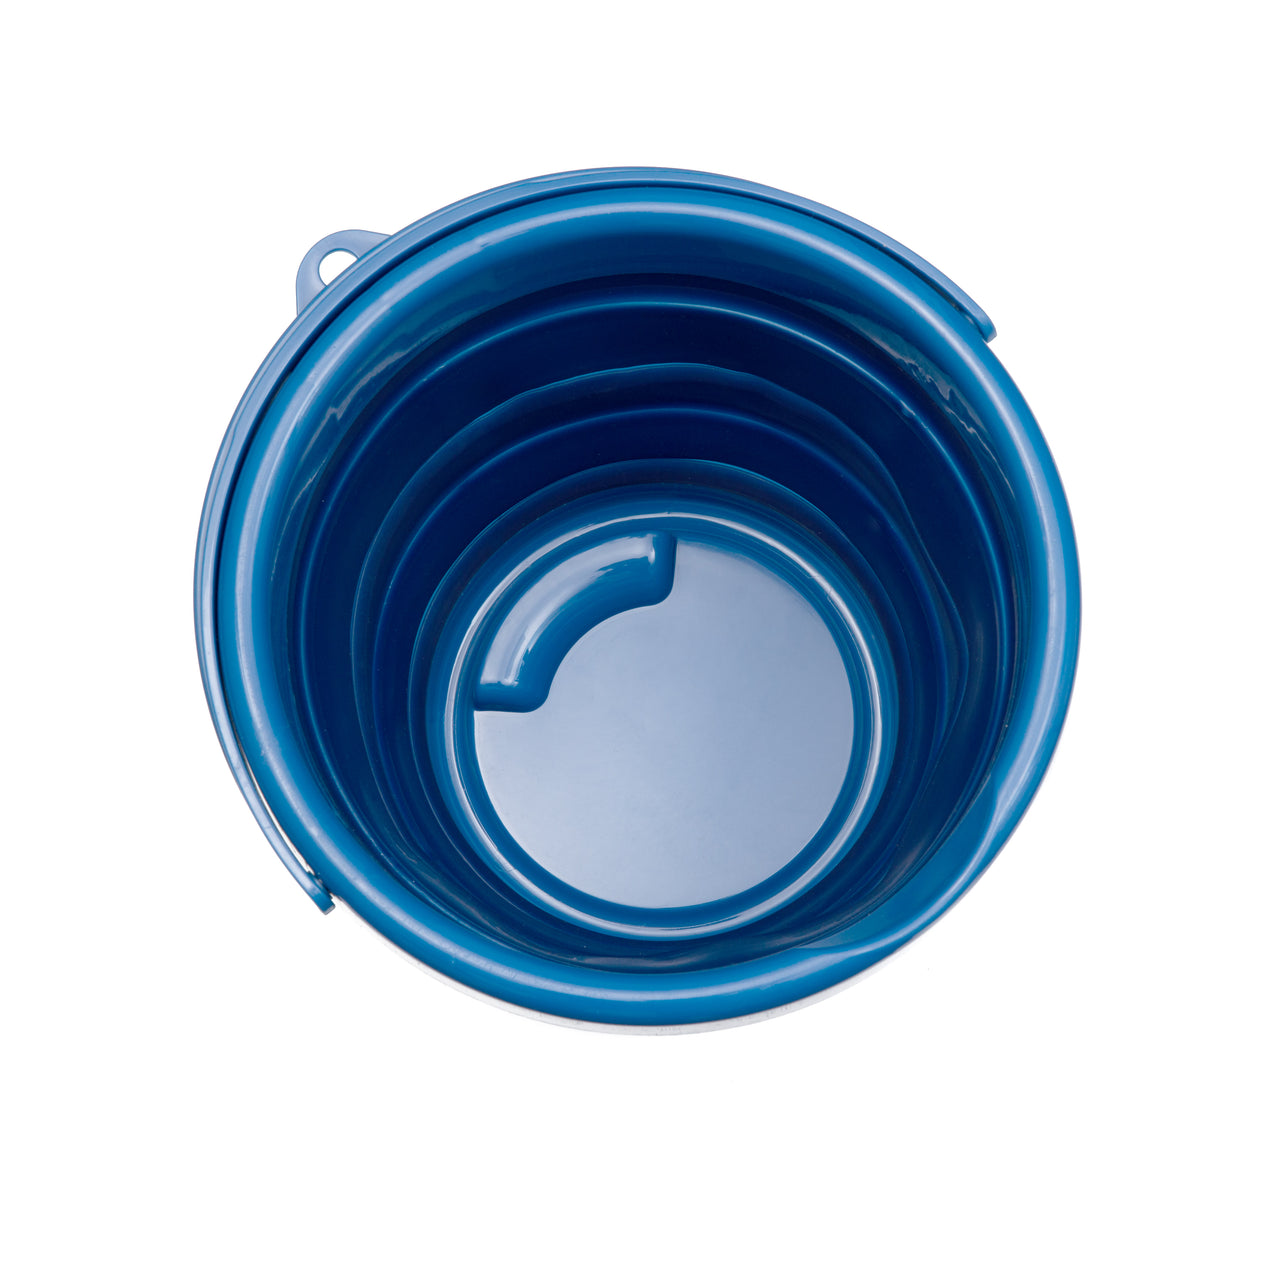 Robert Irvine 5-Quart Collapsible Bucket-Blue